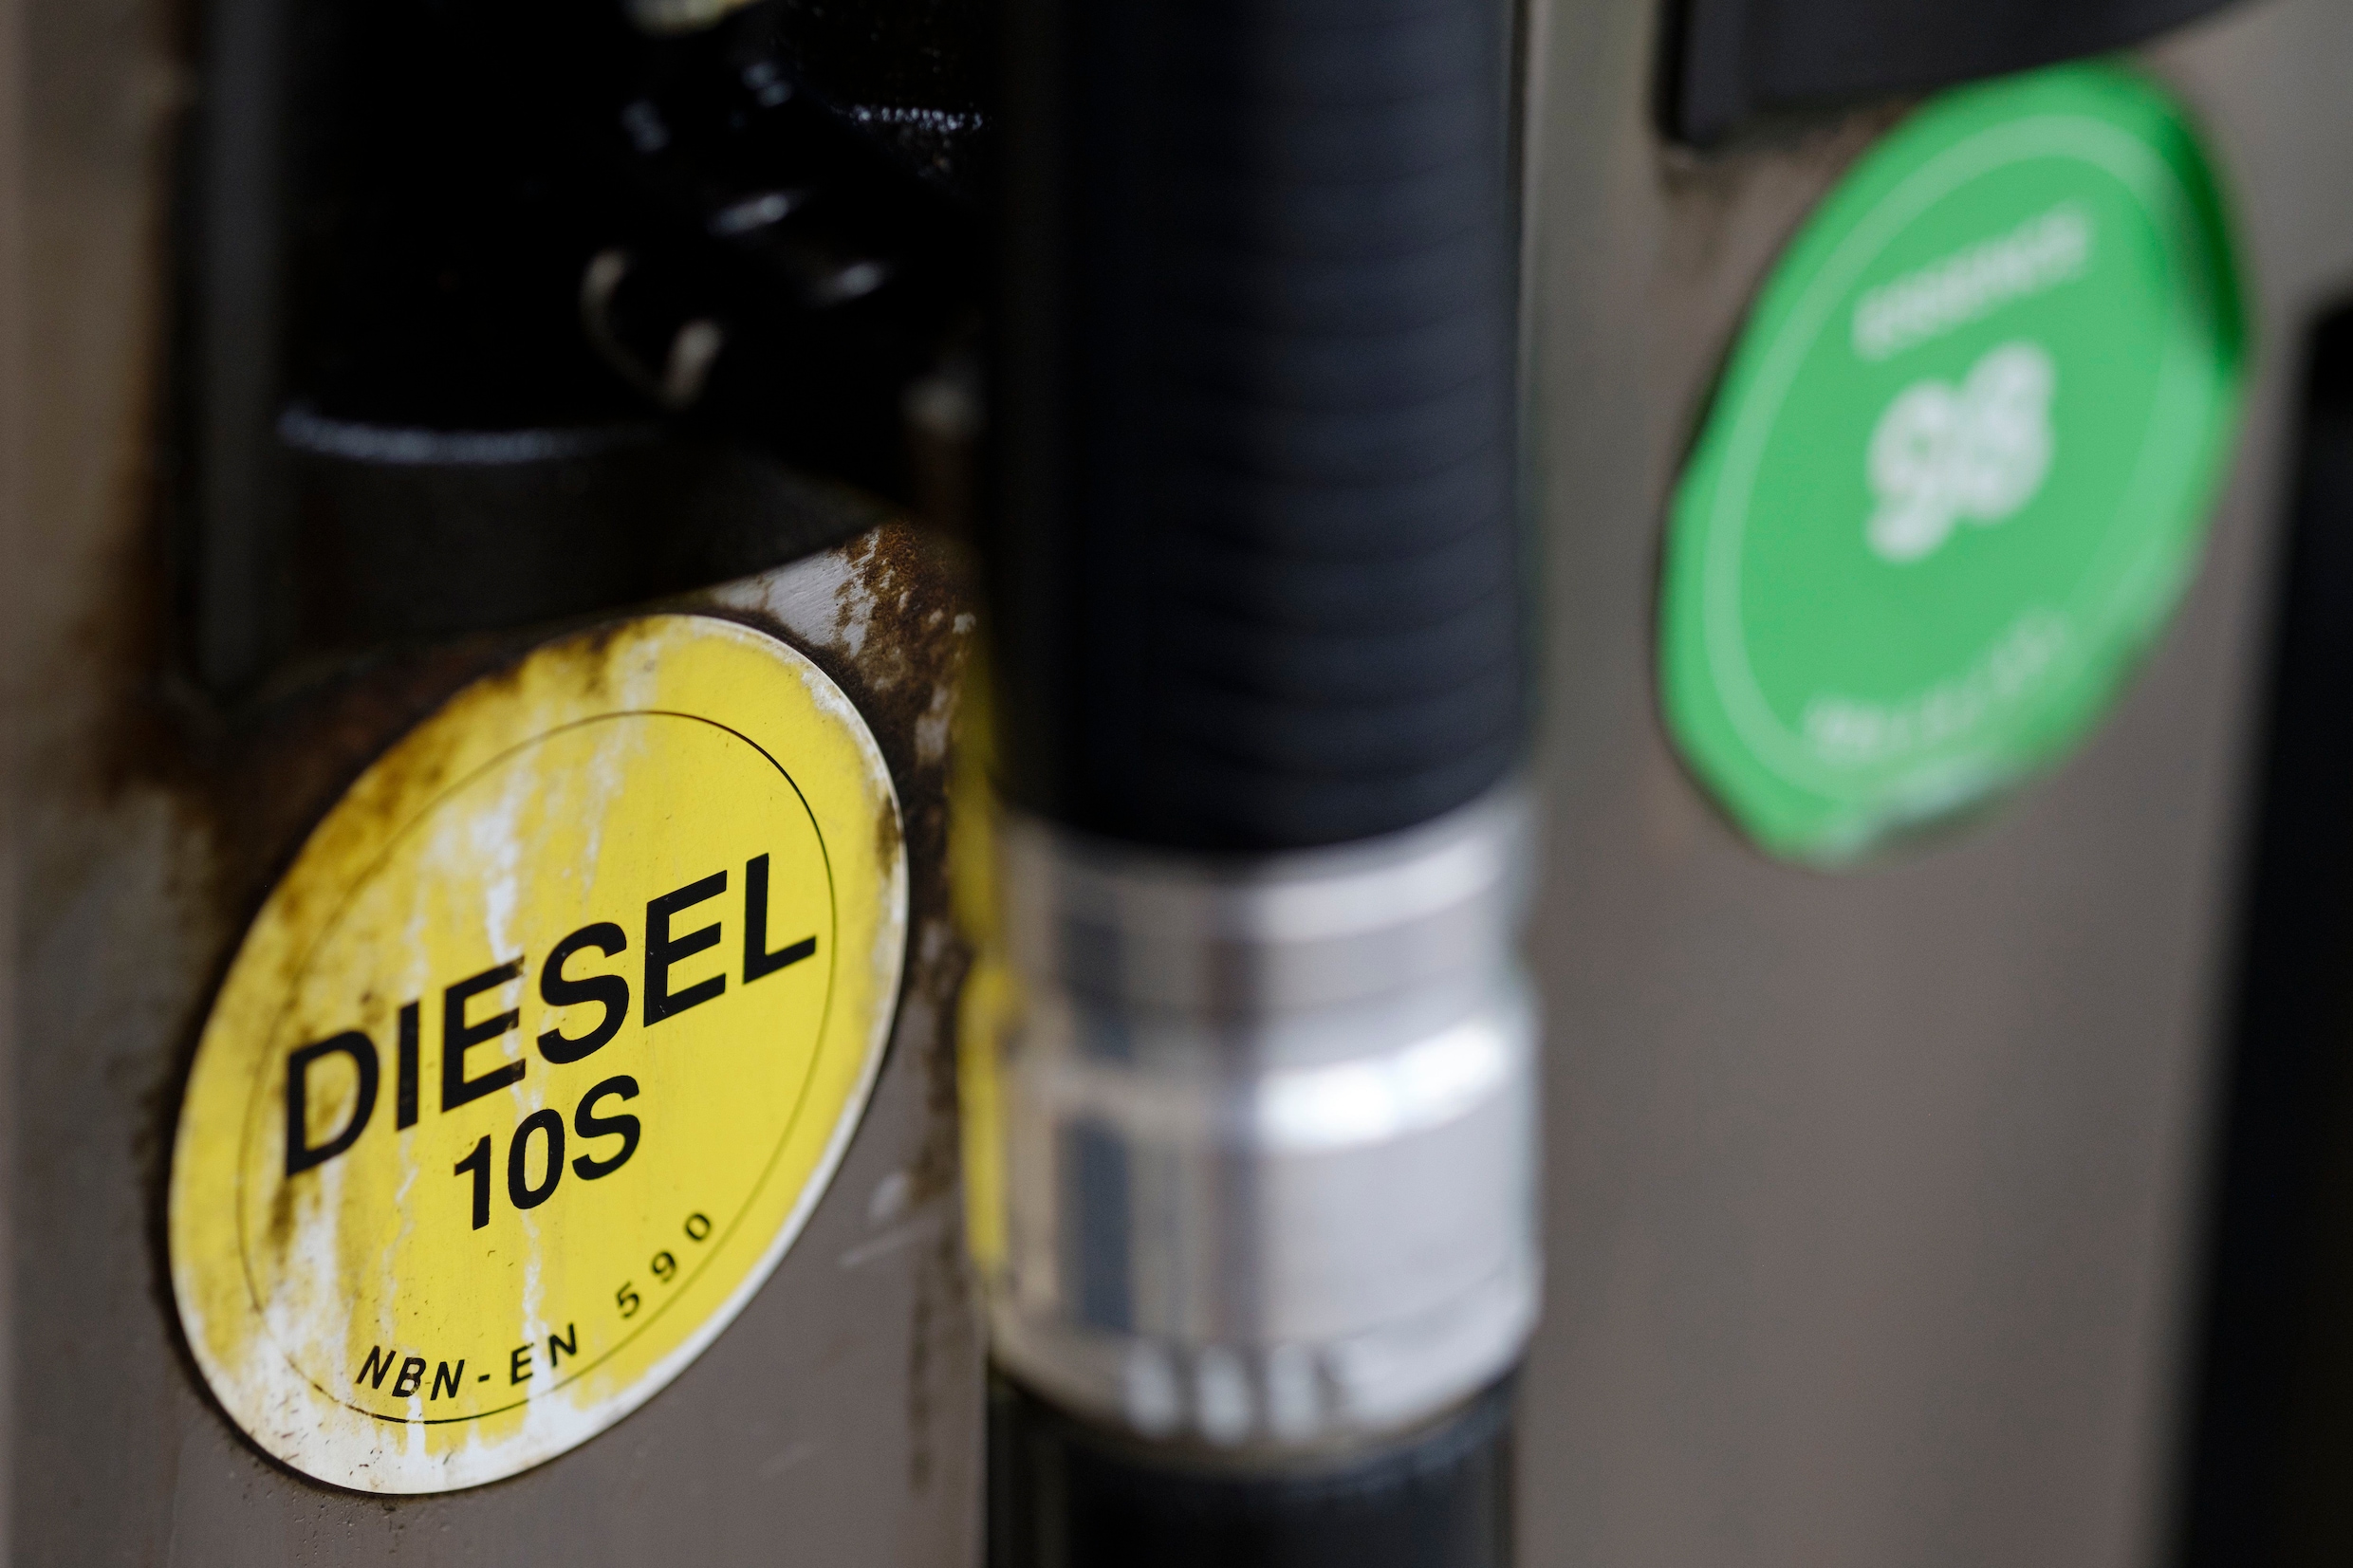 Diesel nooit eerder zo duur: 1,609 euro per liter